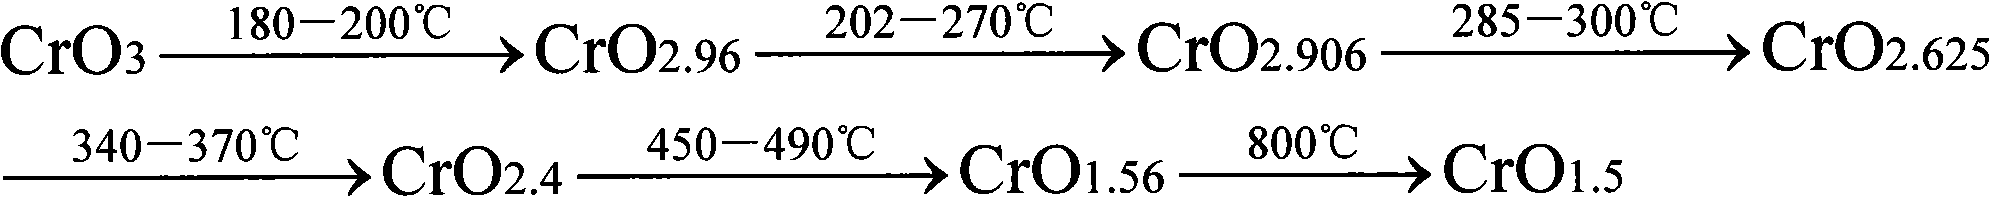 Method for detoxicating chromium residue by utilizing high sulfur petroleum coke through microwave